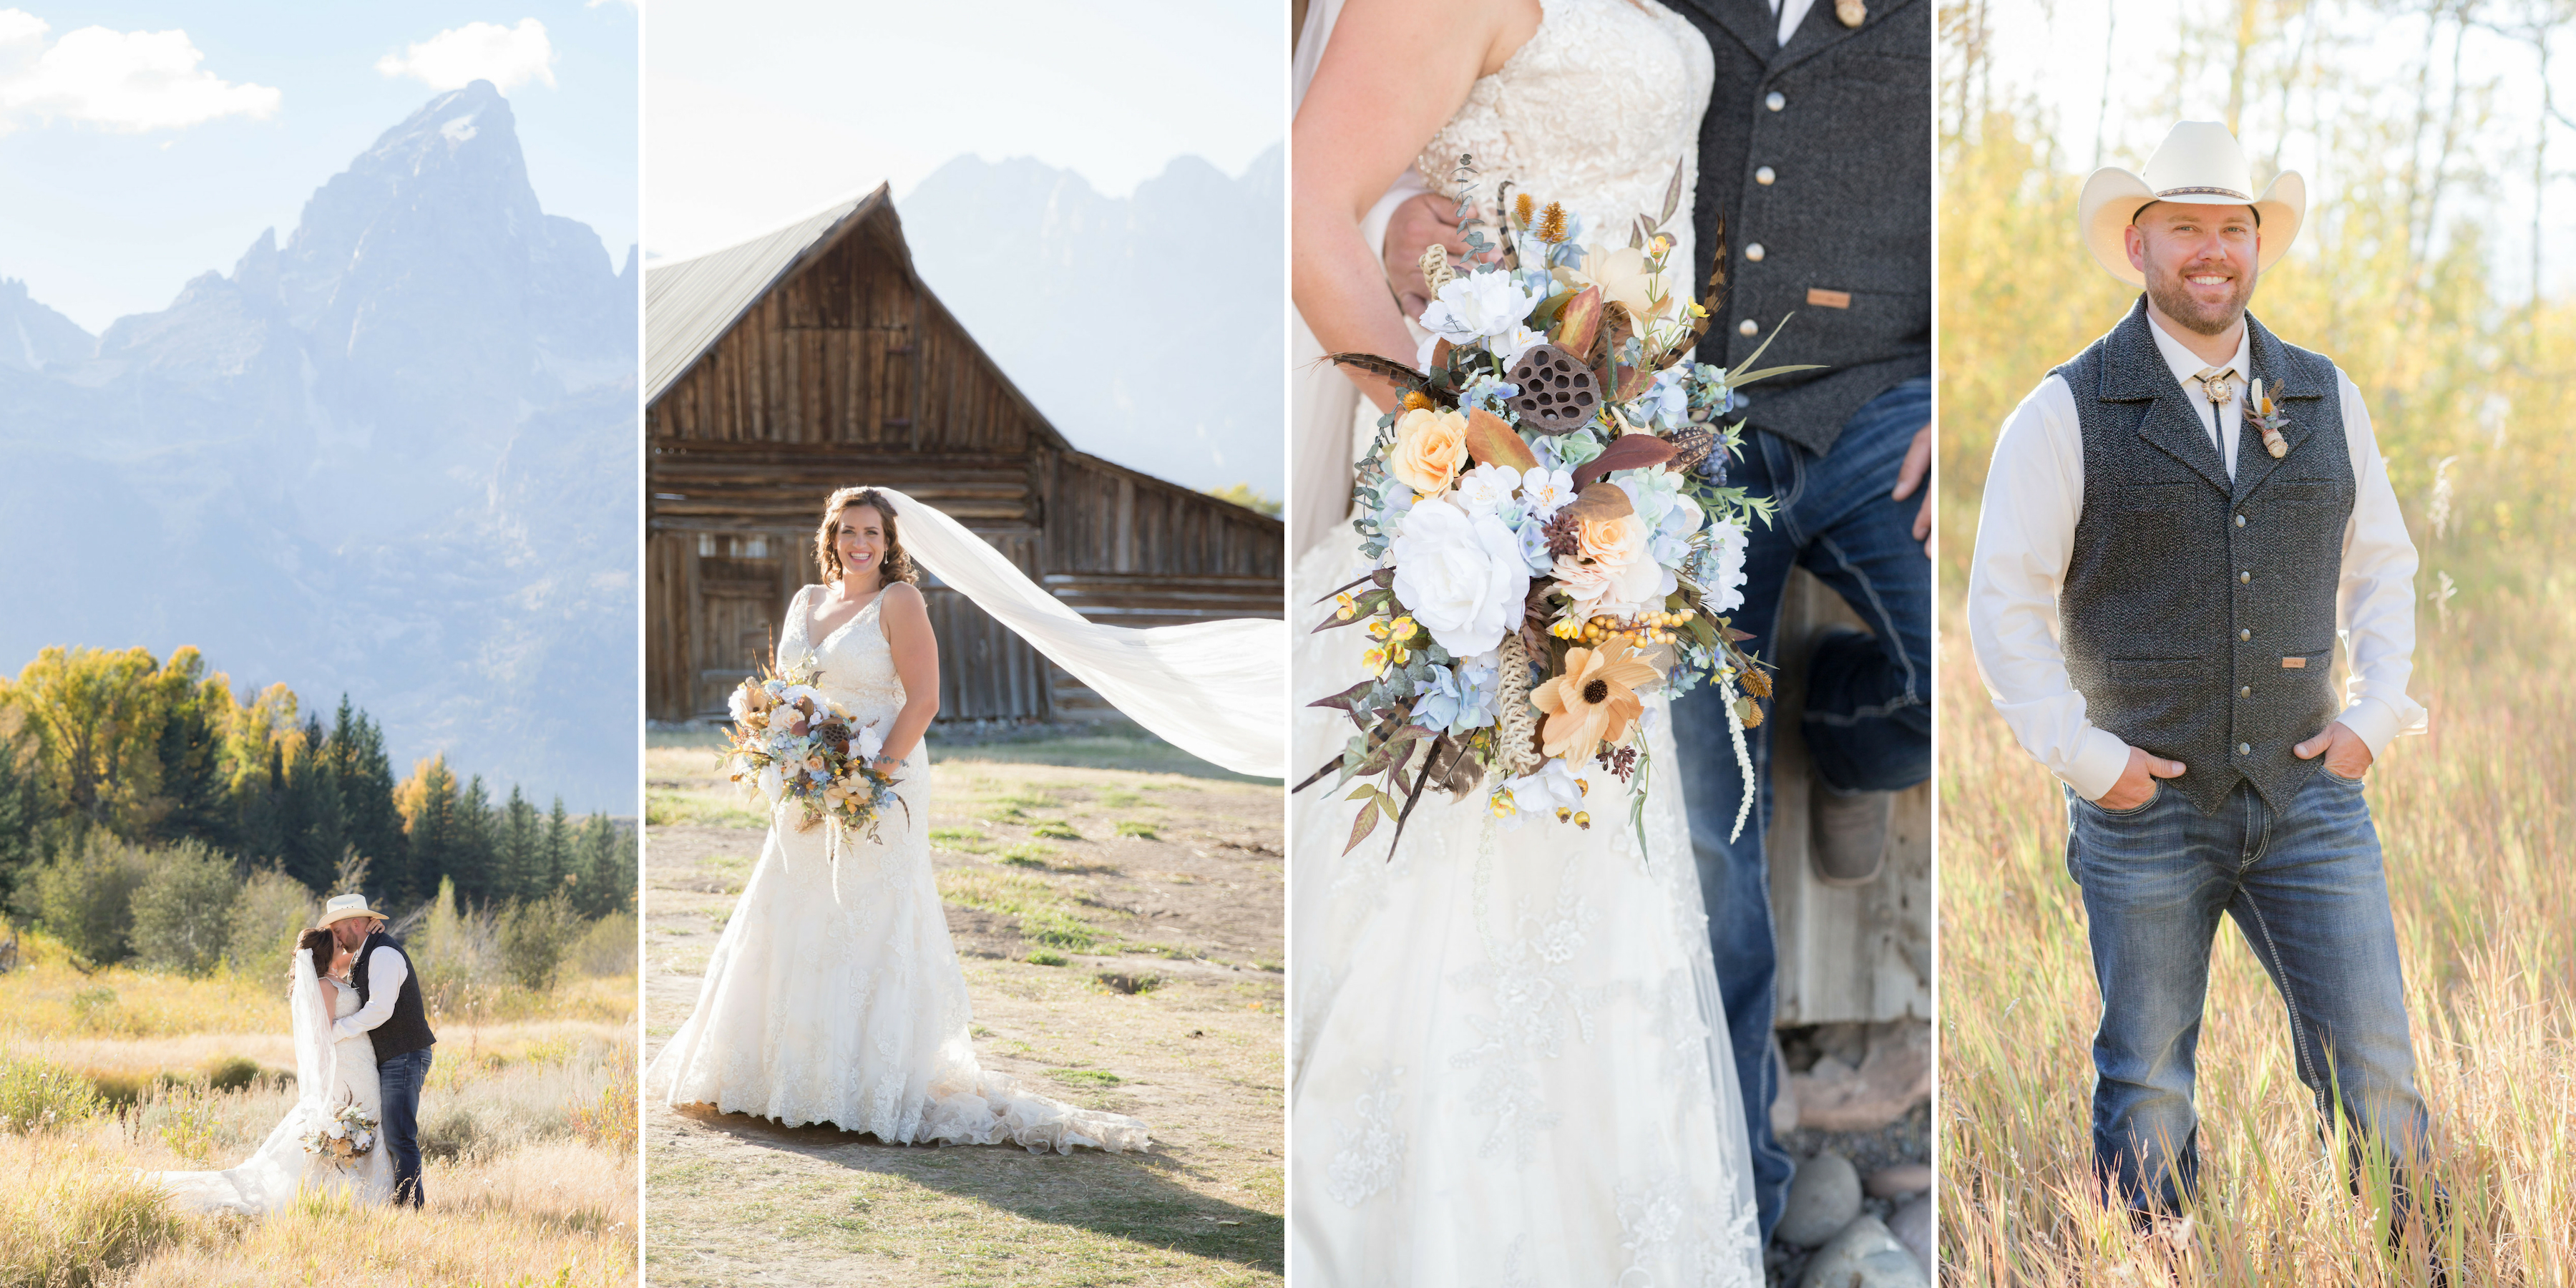 Fall weddings in Grand Teton National Park